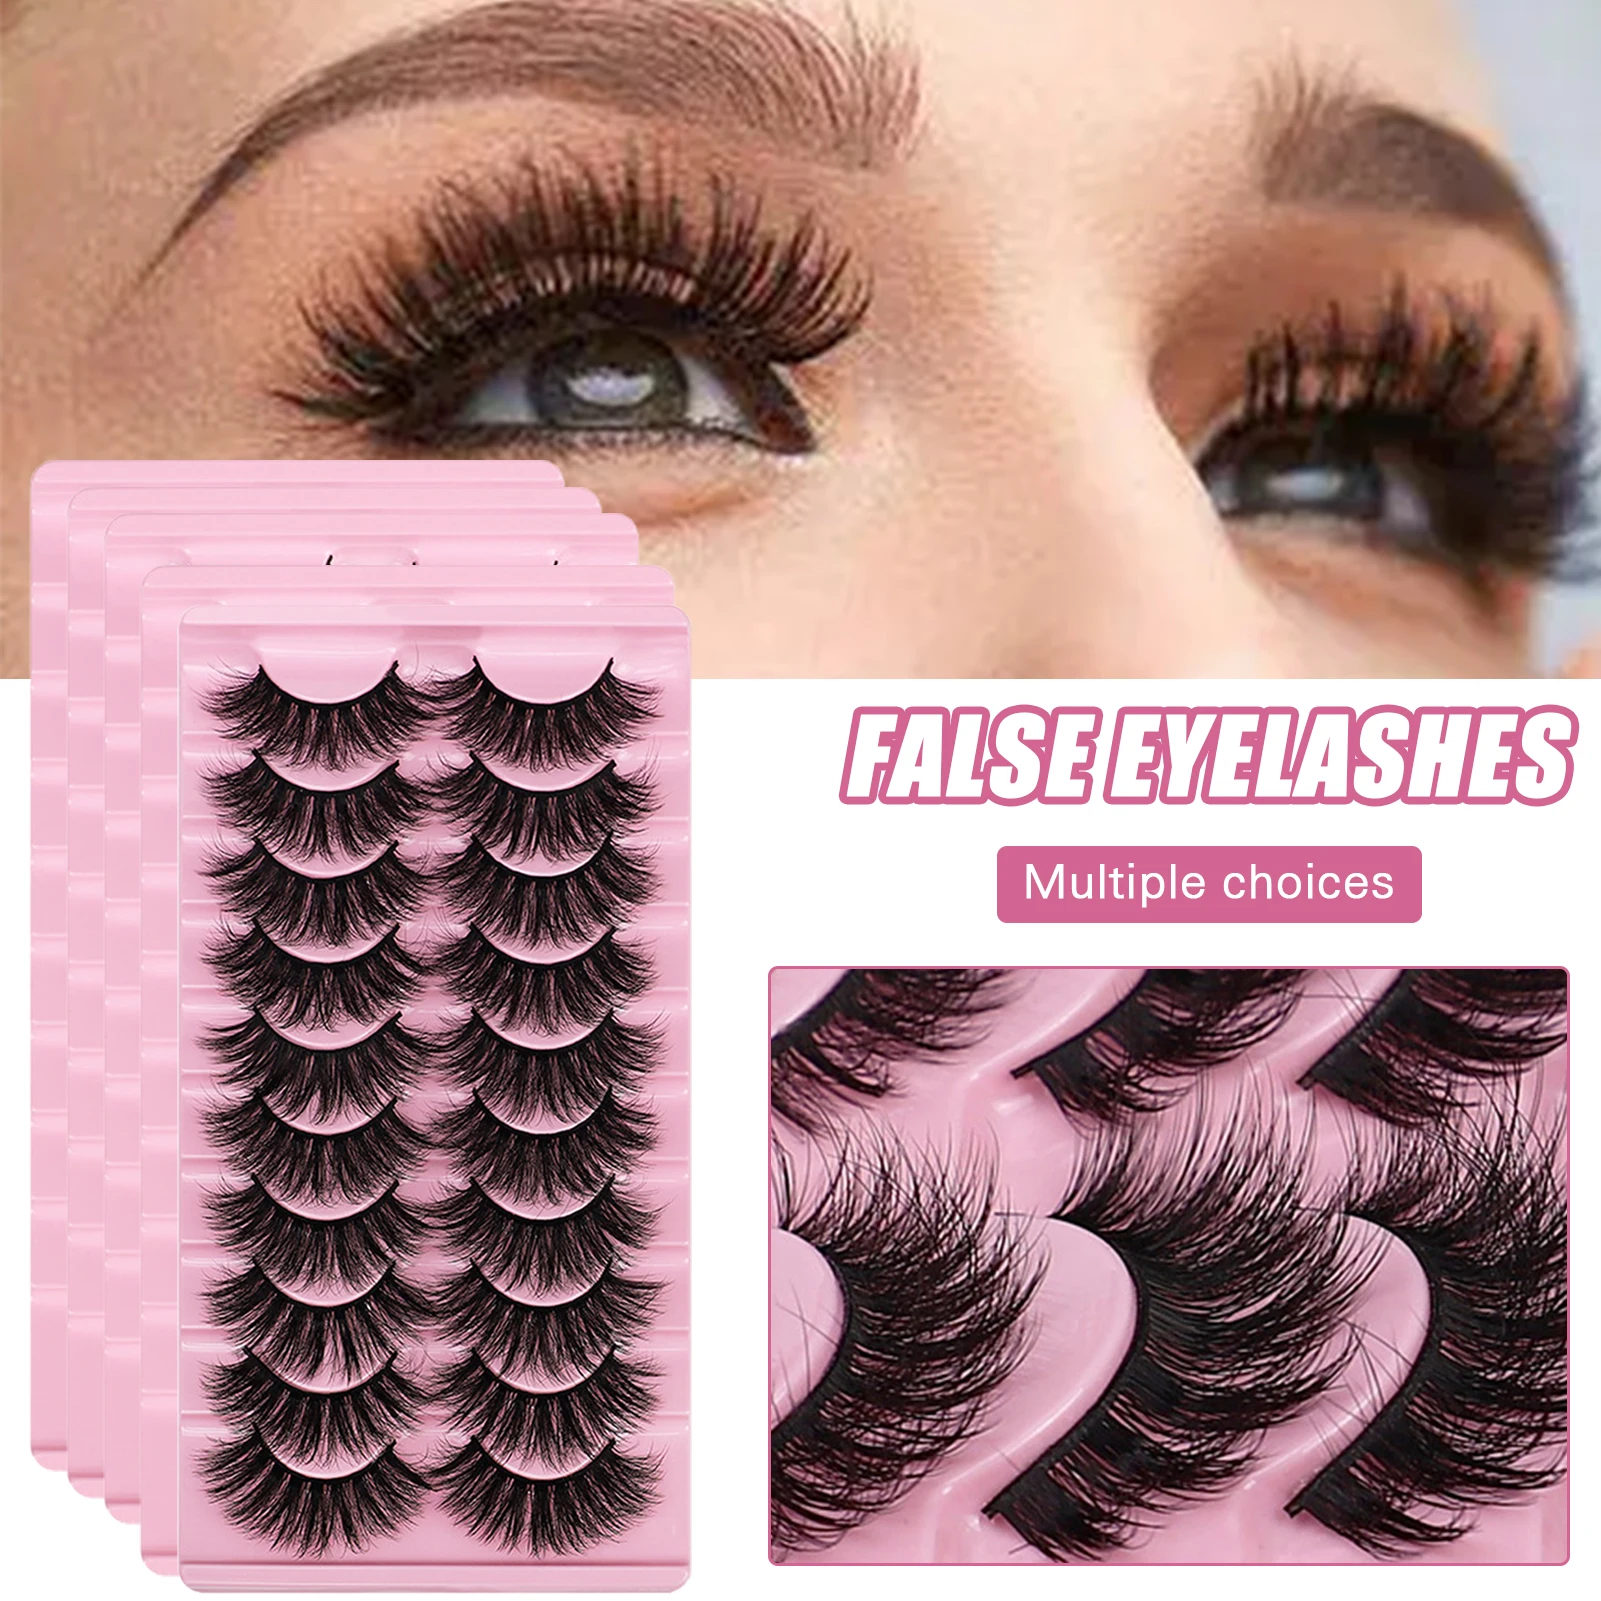 

10 Pairs Fake Eyelashes 3D Handmade Natural Long Thick Fluffy Artifical Lashes Women Faux Eyelashes Set SEC88